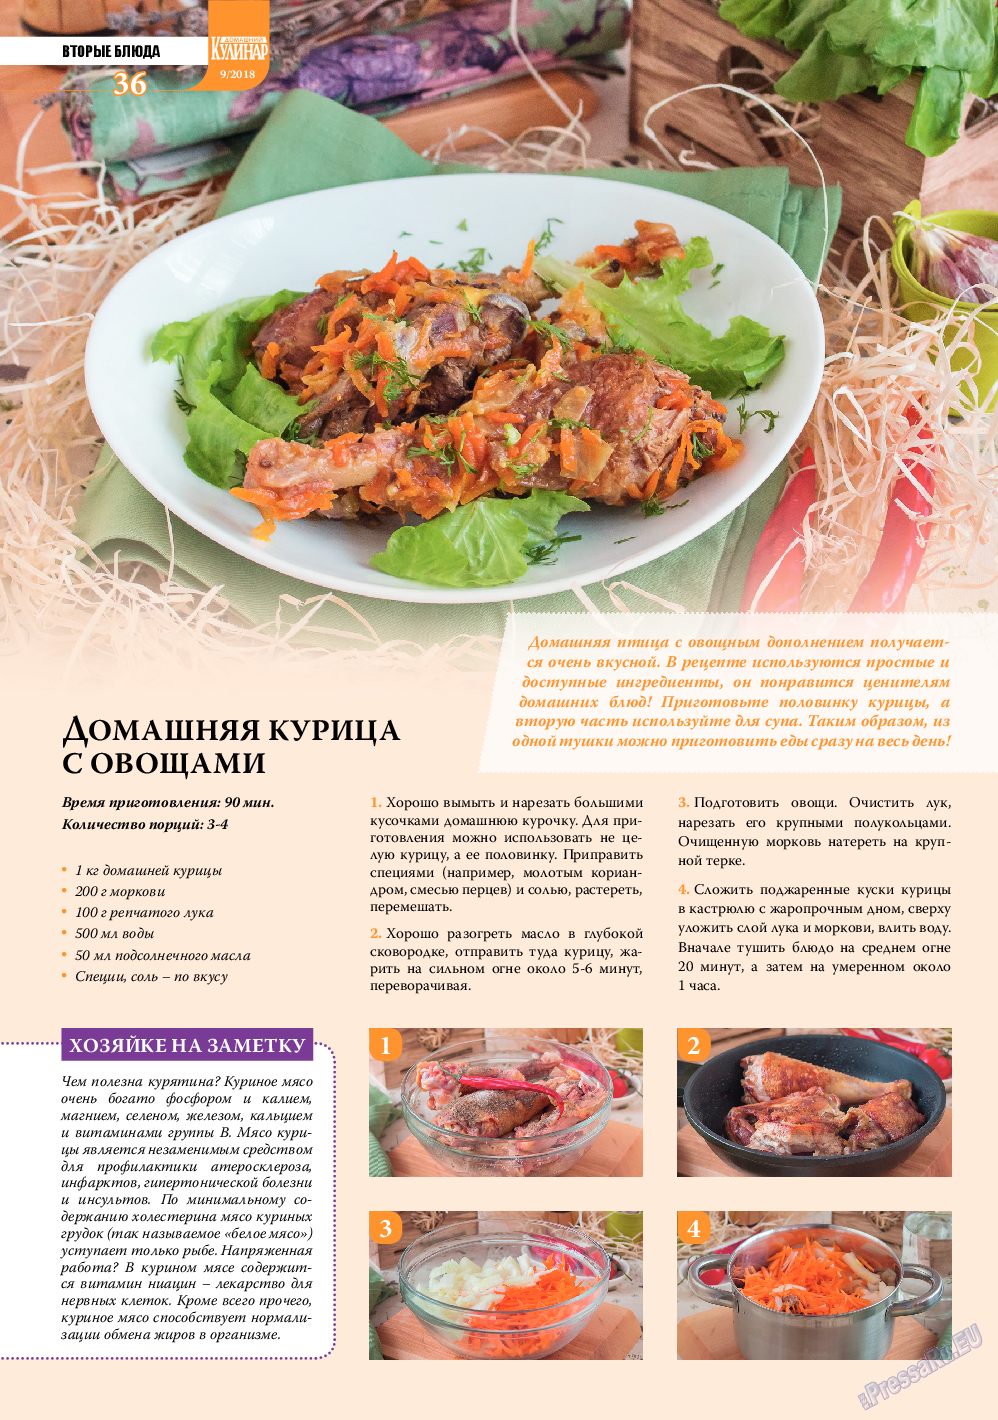 Домашний кулинар (журнал). 2018 год, номер 9, стр. 36